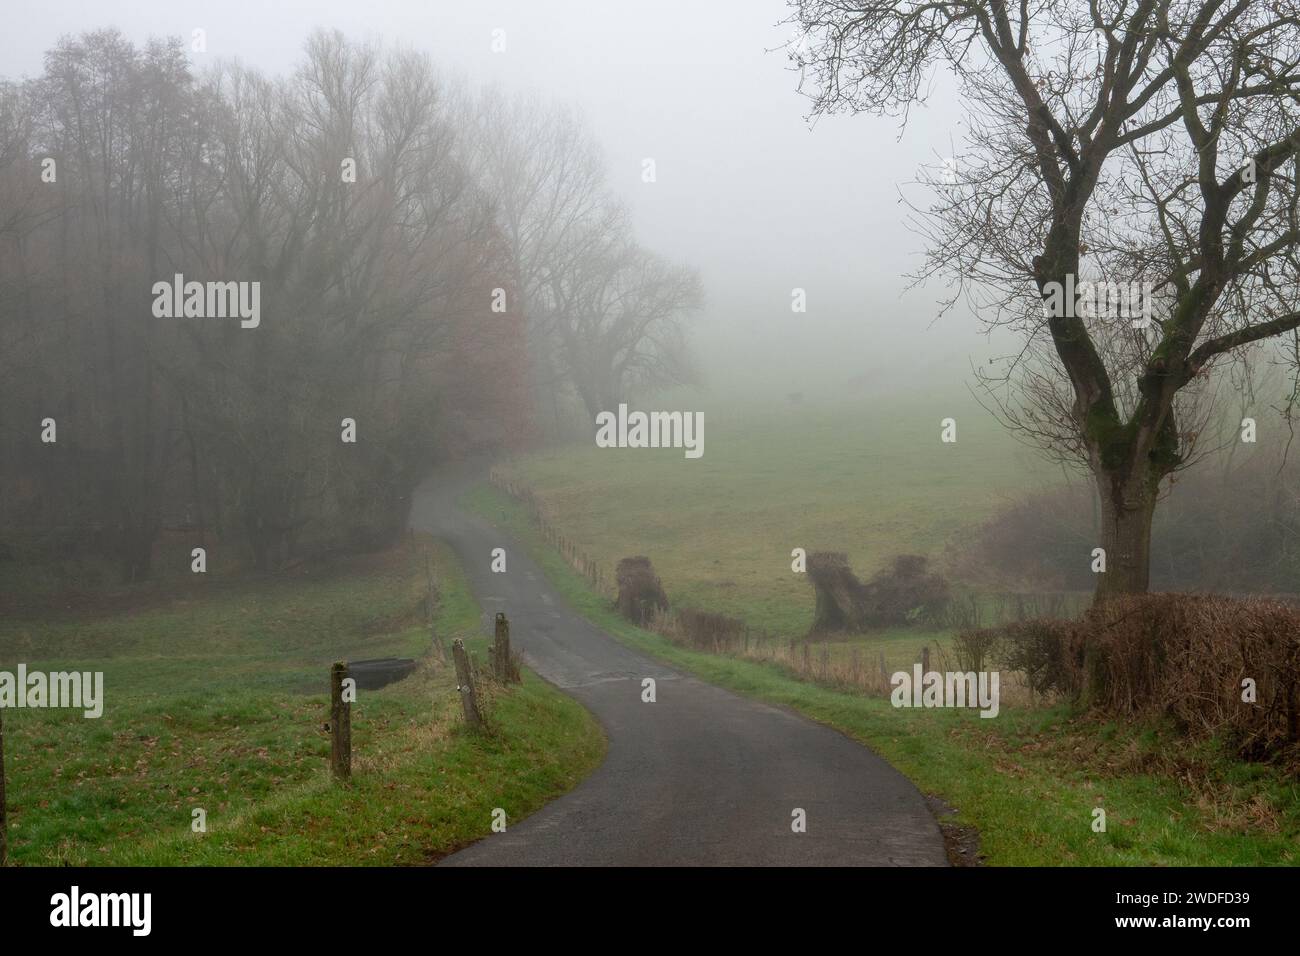 Landscape with misty November atmosphere Stock Photo